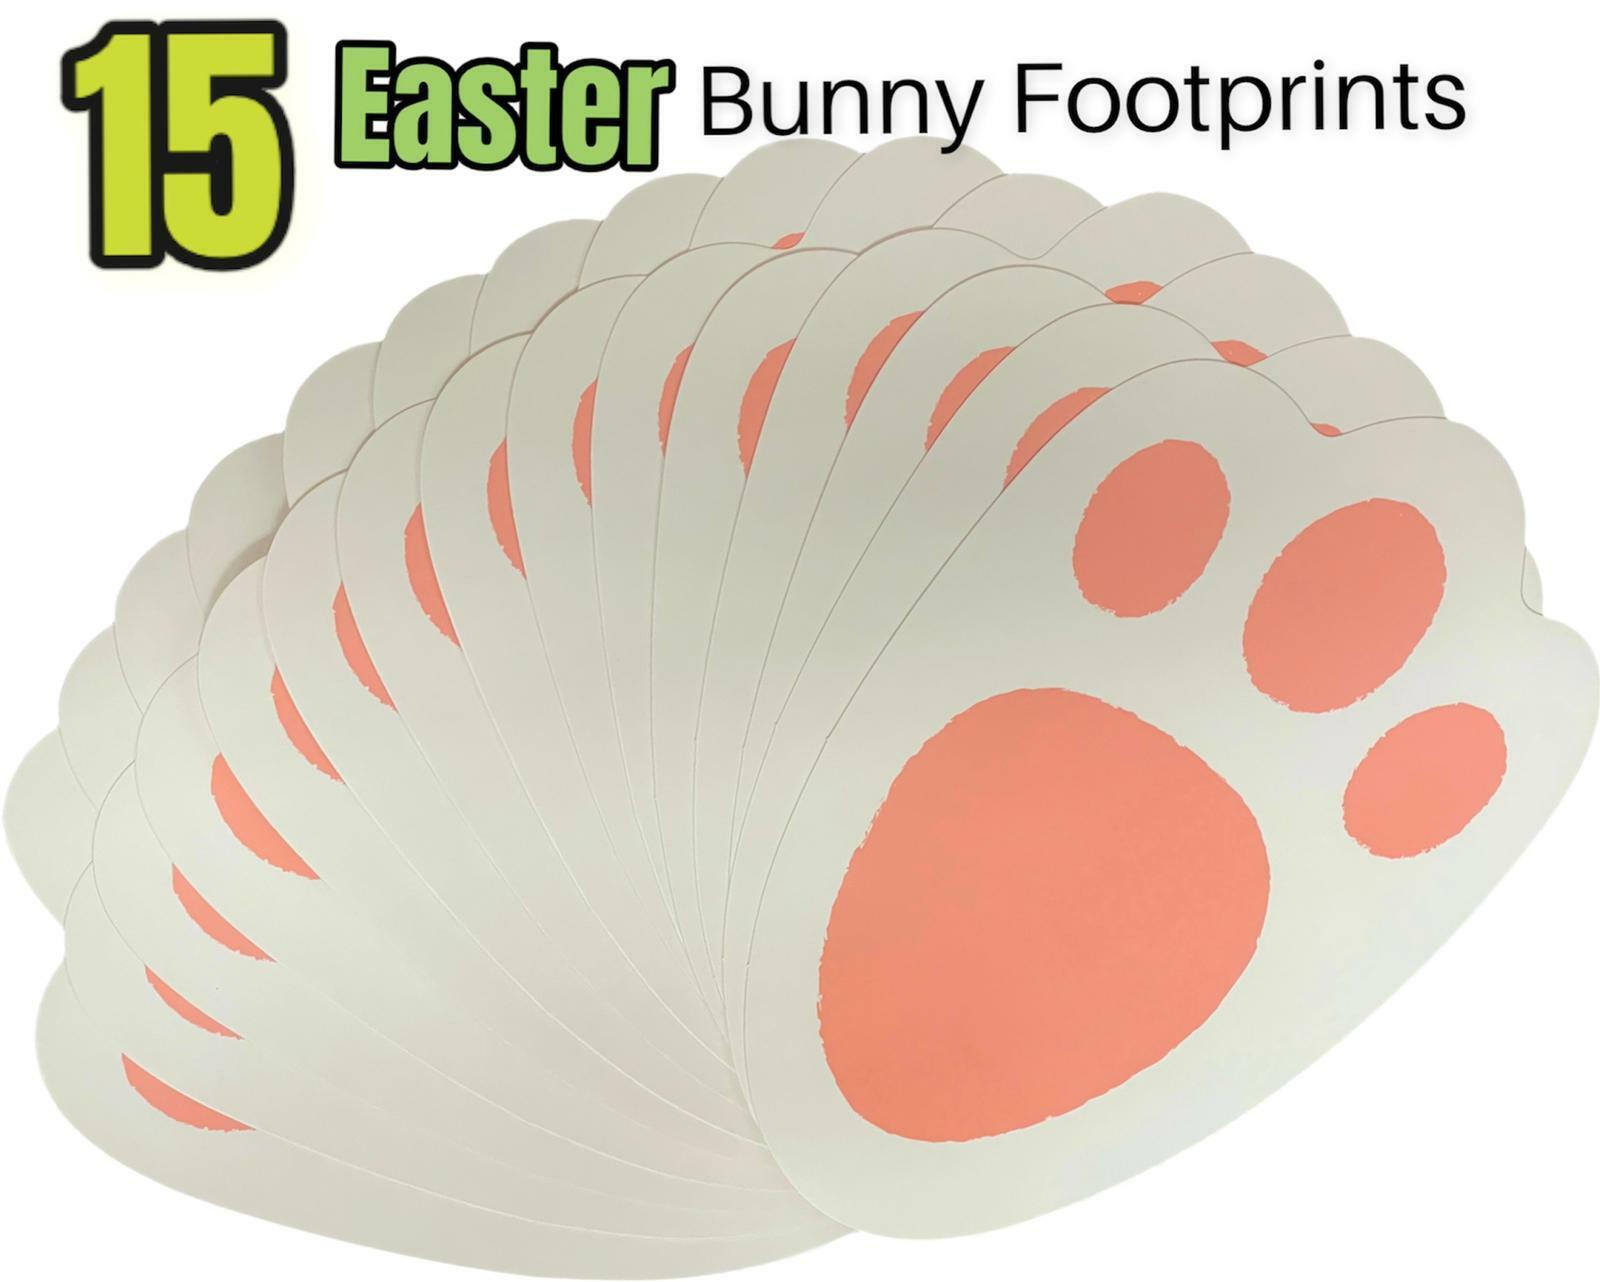 Beclen Harp 15 x EASTER BUNNY FEET Egg Hunt Rabbit Footprint Paw Print Foot Craft Game Kids